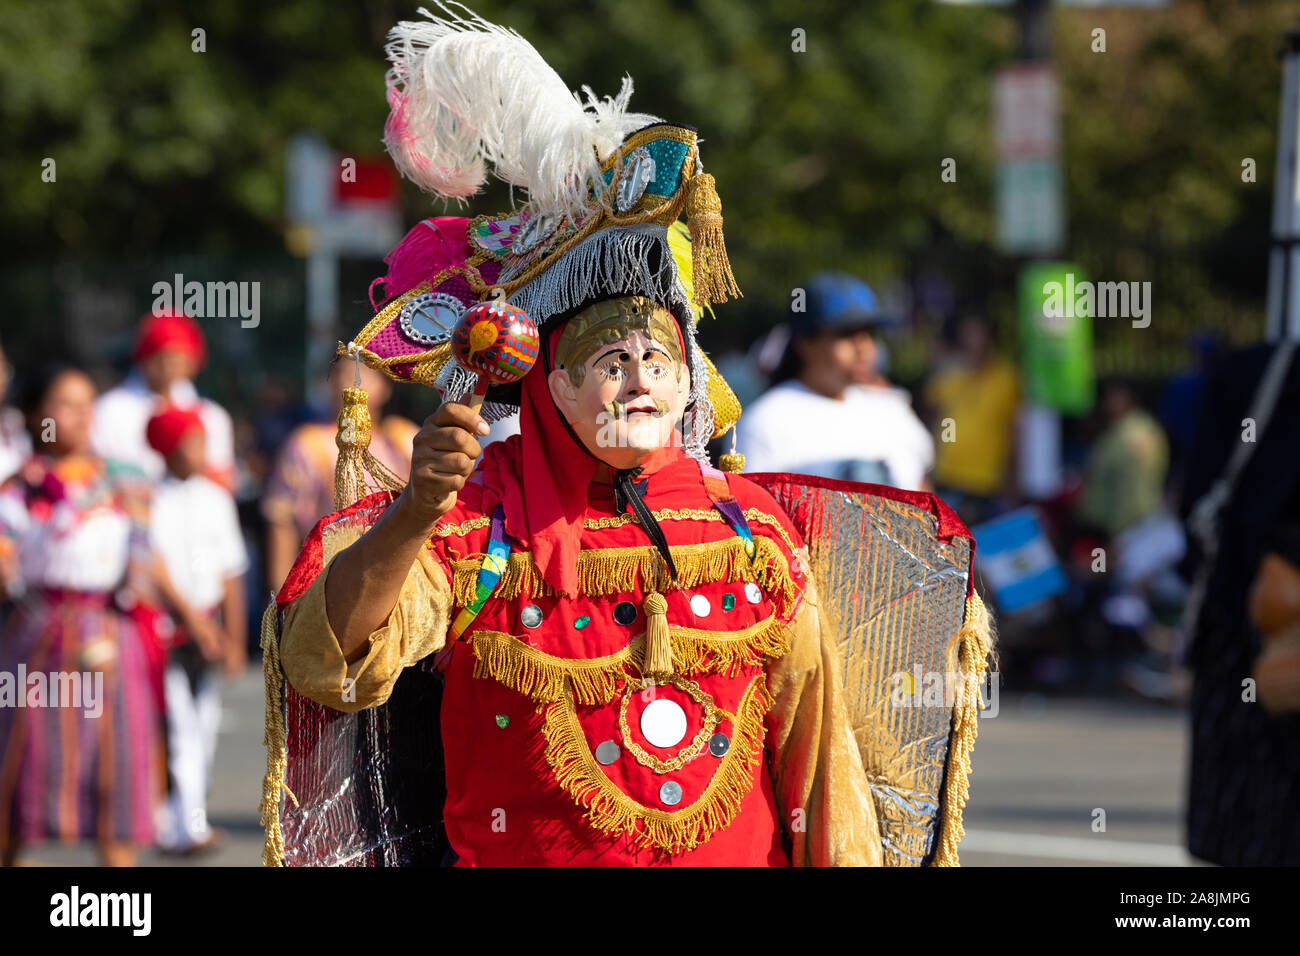 Washington DC, USA - September 21, 2019: The Fiesta DC, Guatemalan dancer performing El Baile de los Moros y Cristianos traditional dance during the p Stock Photo